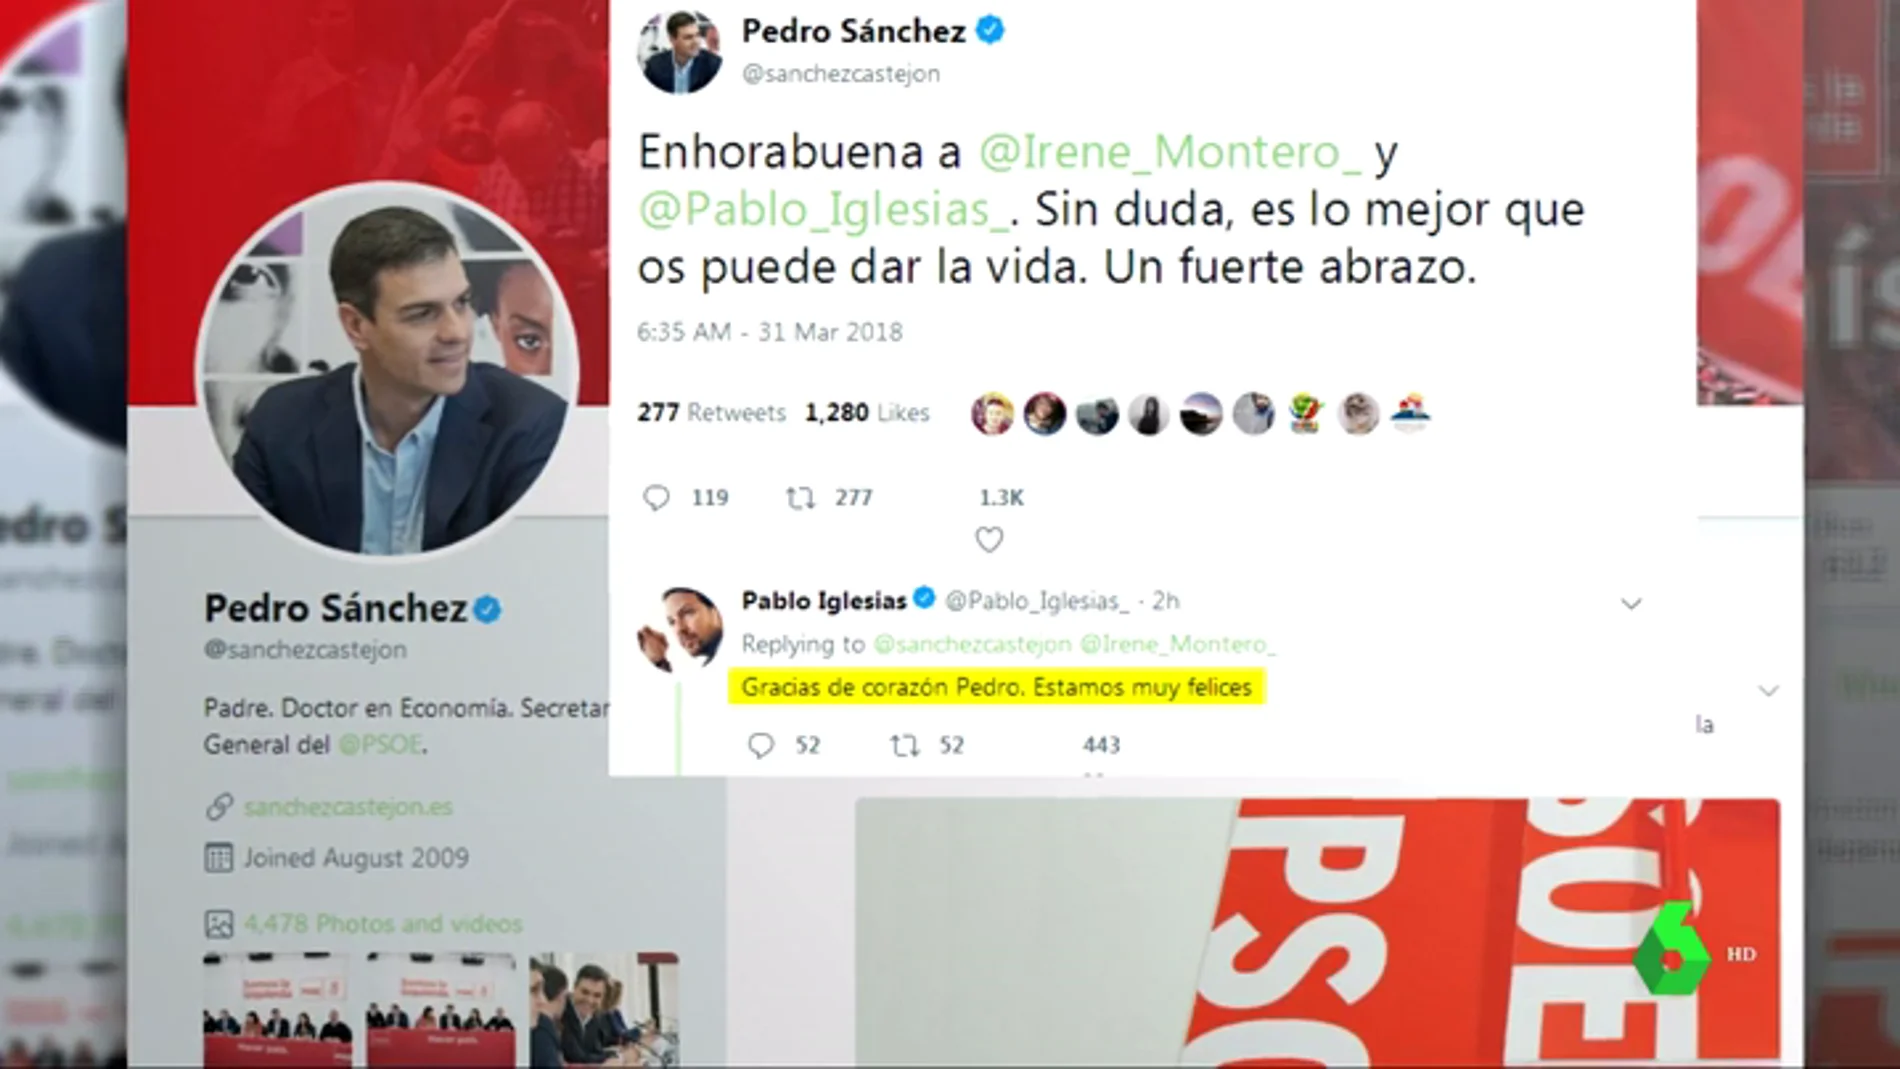 Representantes políticos como Pedro Sánchez felicitan a Irene Montero y Pablo Iglesias tras anunciar que tendrán mellizos